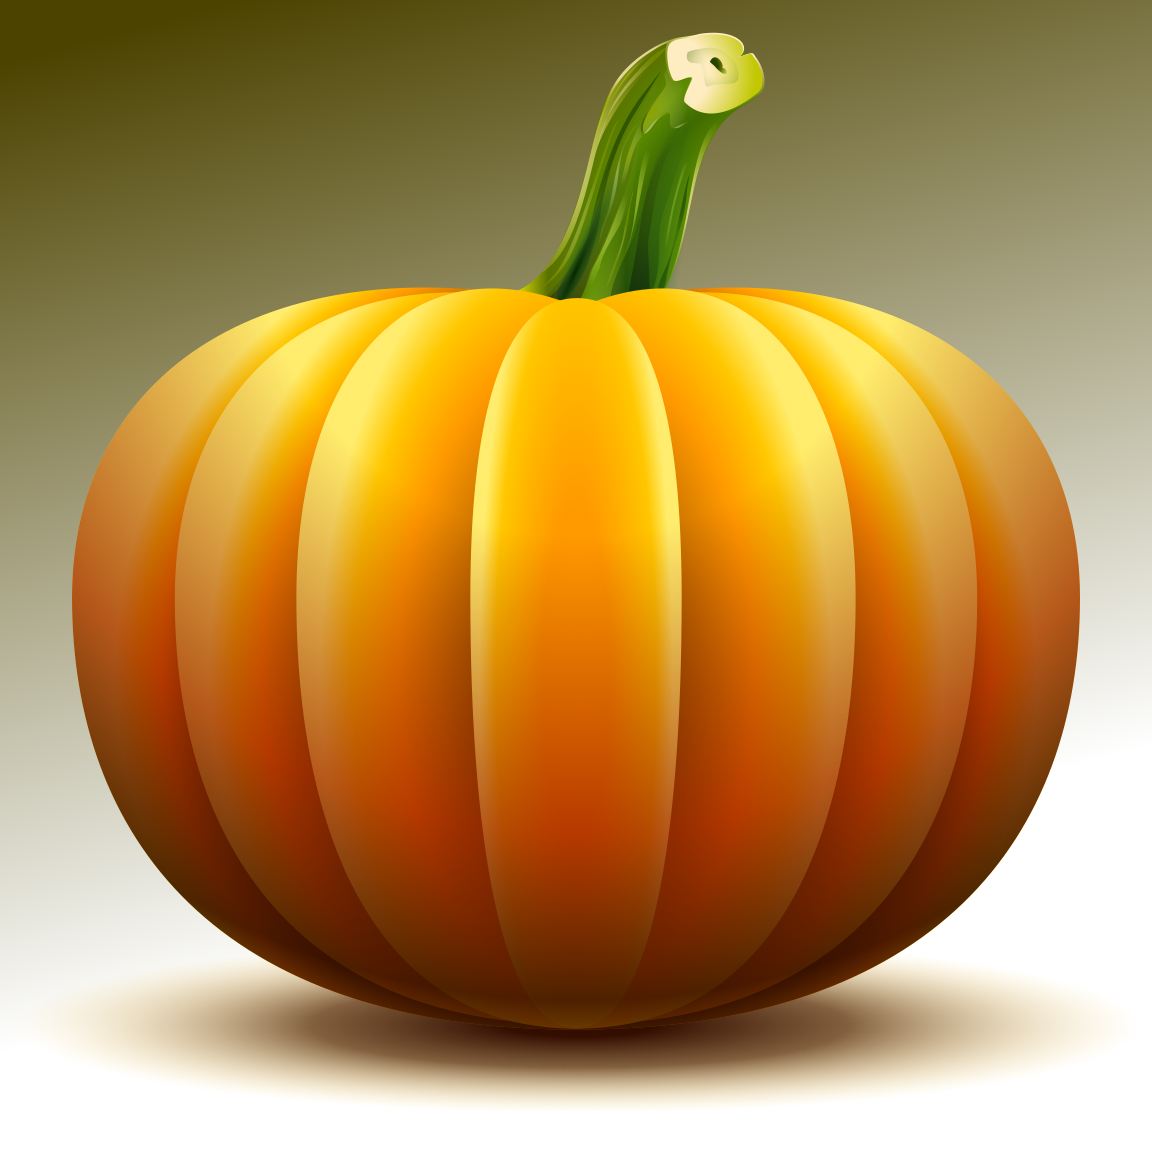 DigitalDrawer: Draw a Pumpkin